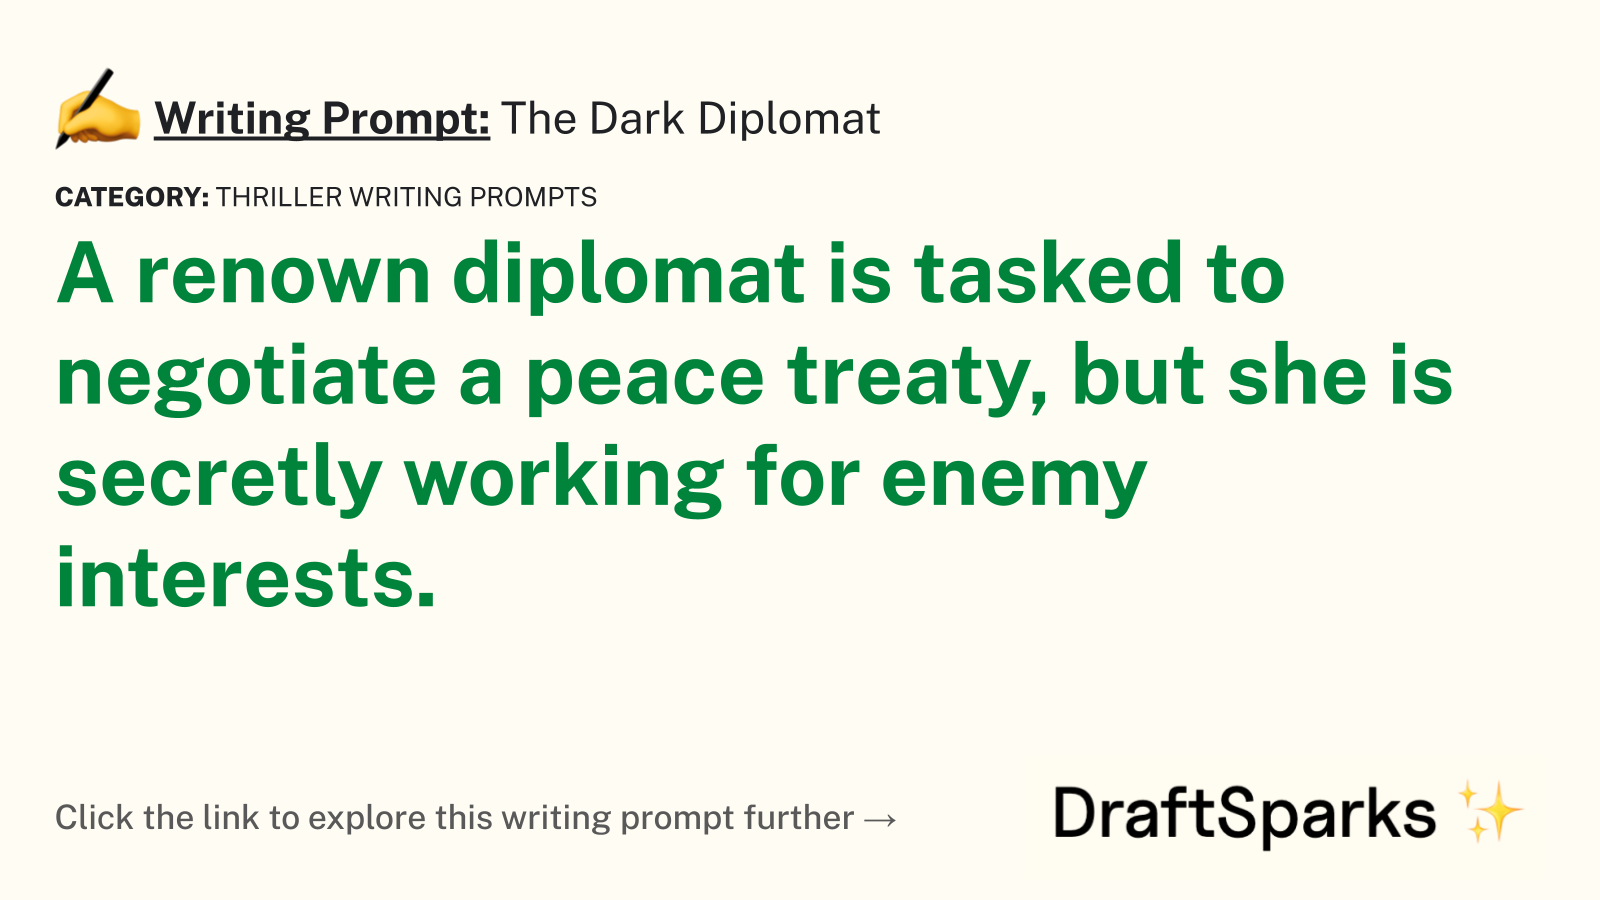 The Dark Diplomat